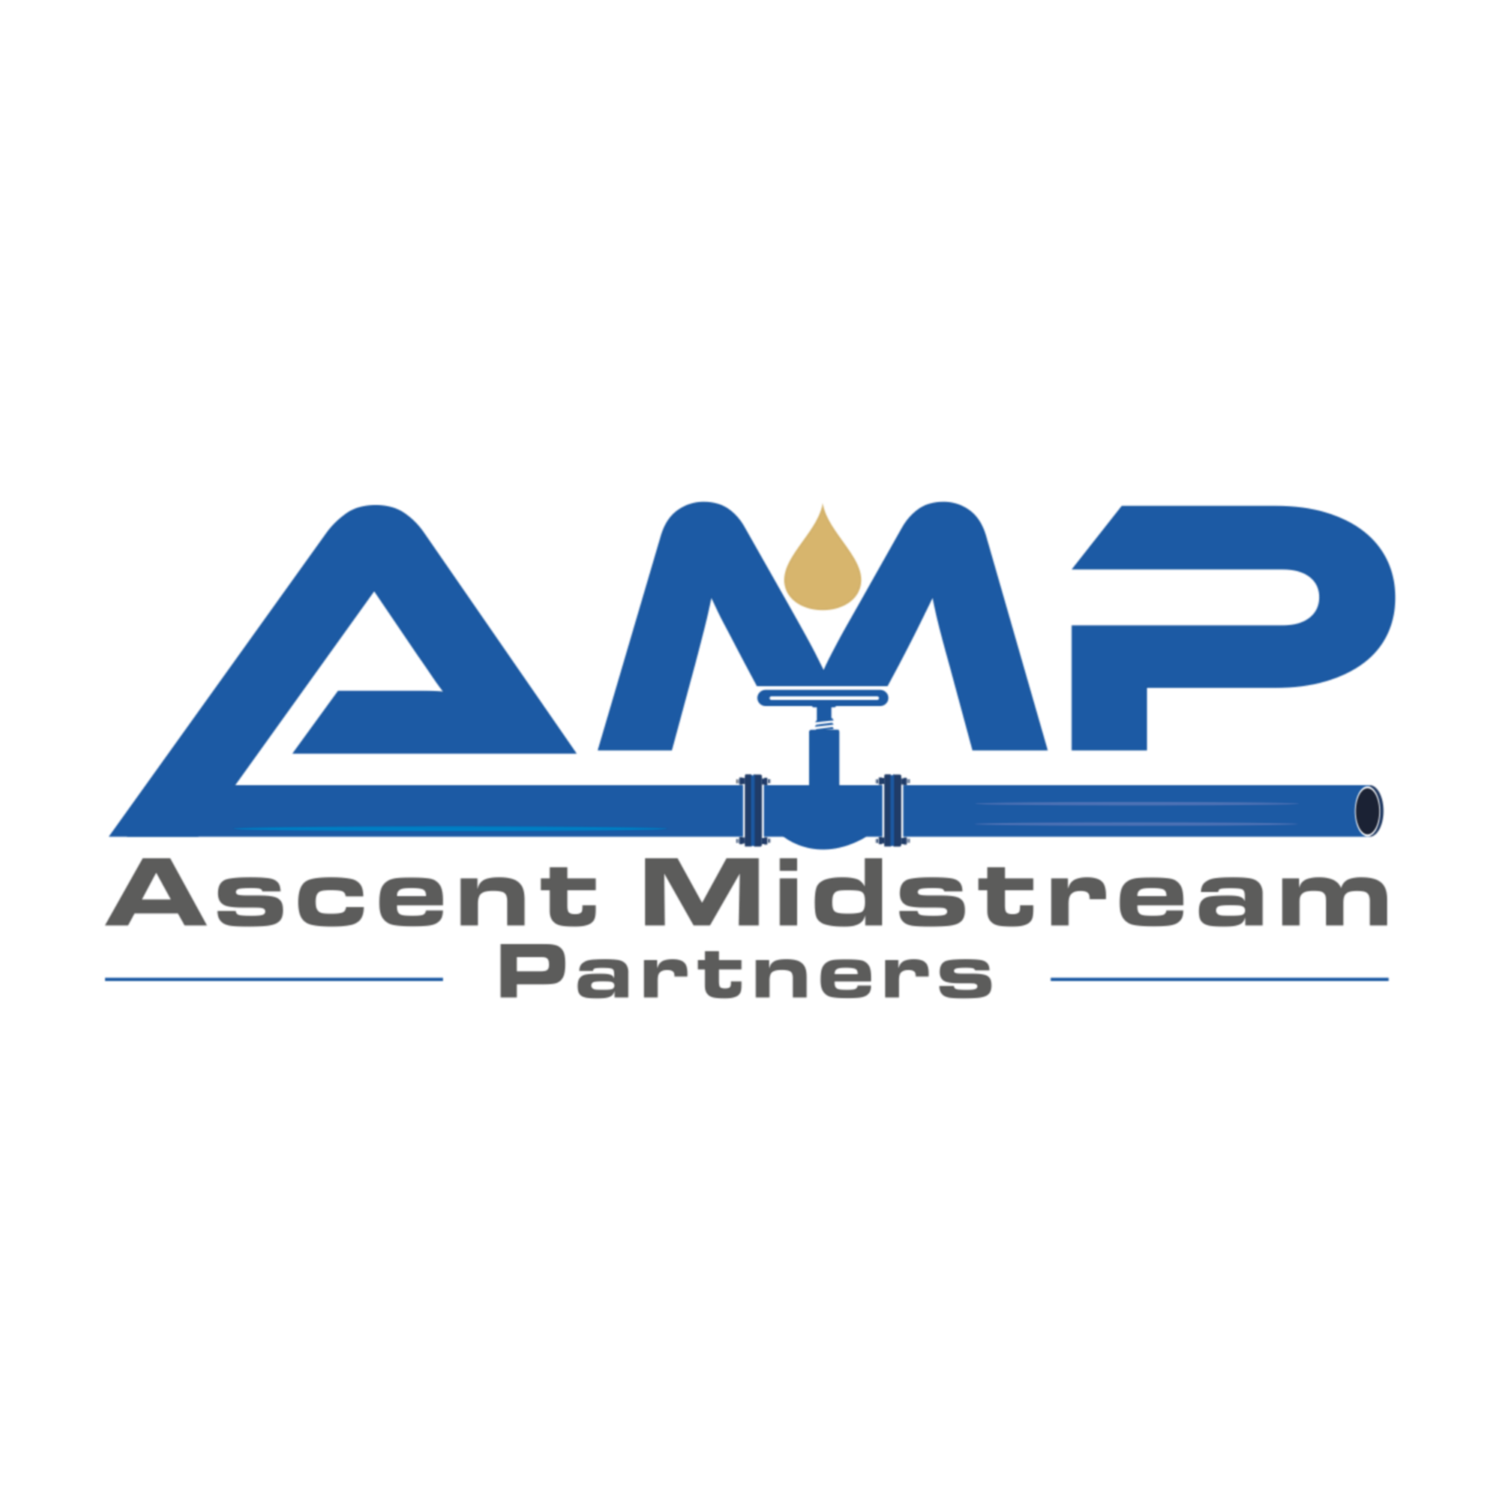 Ascent Midstream Partners